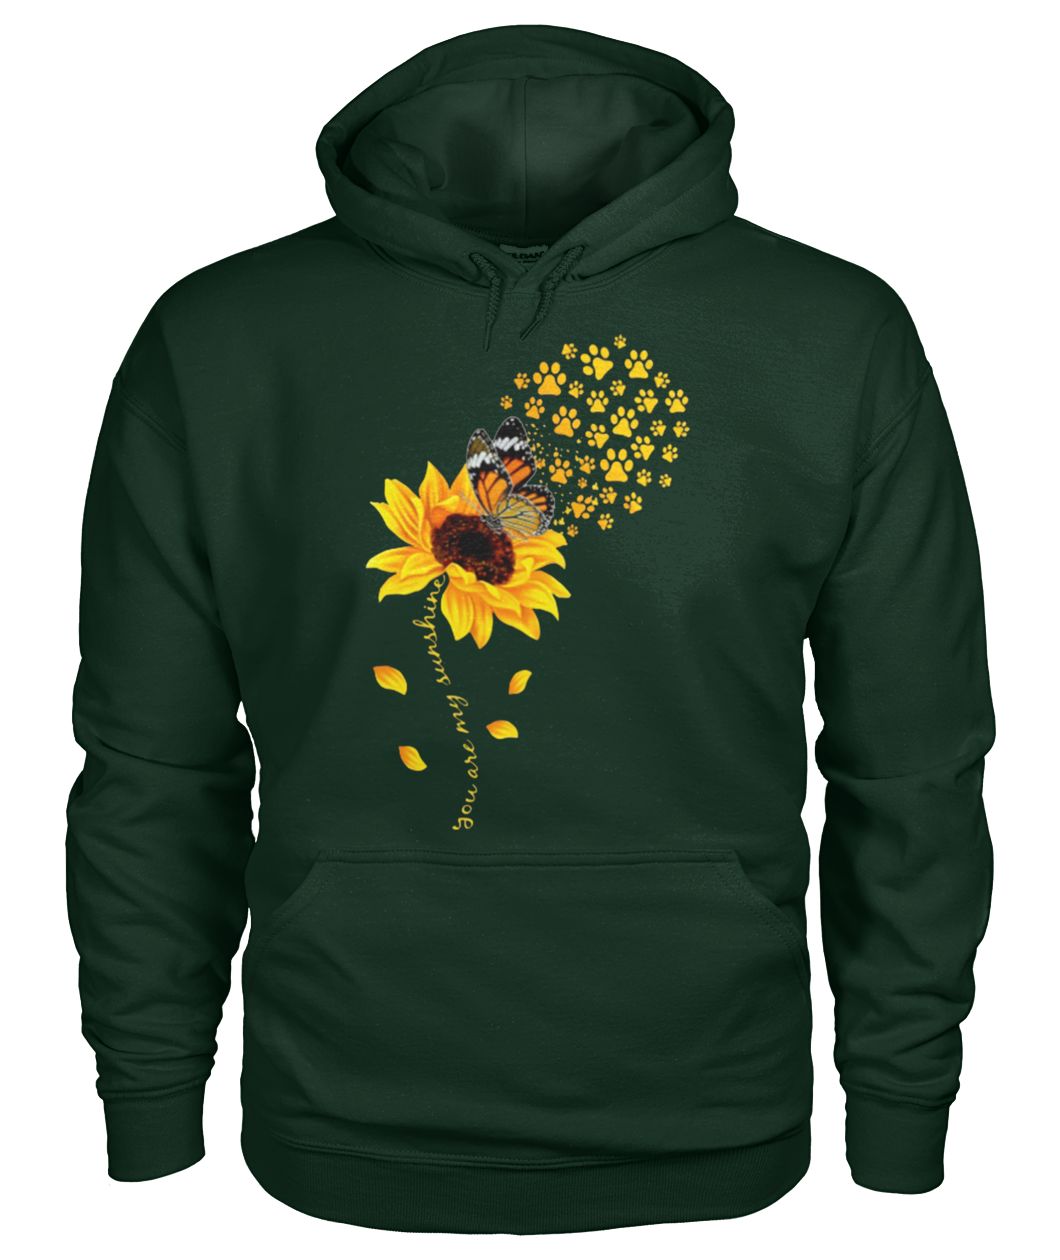 You are my sunshine dog paw sunflower gildan hoodie